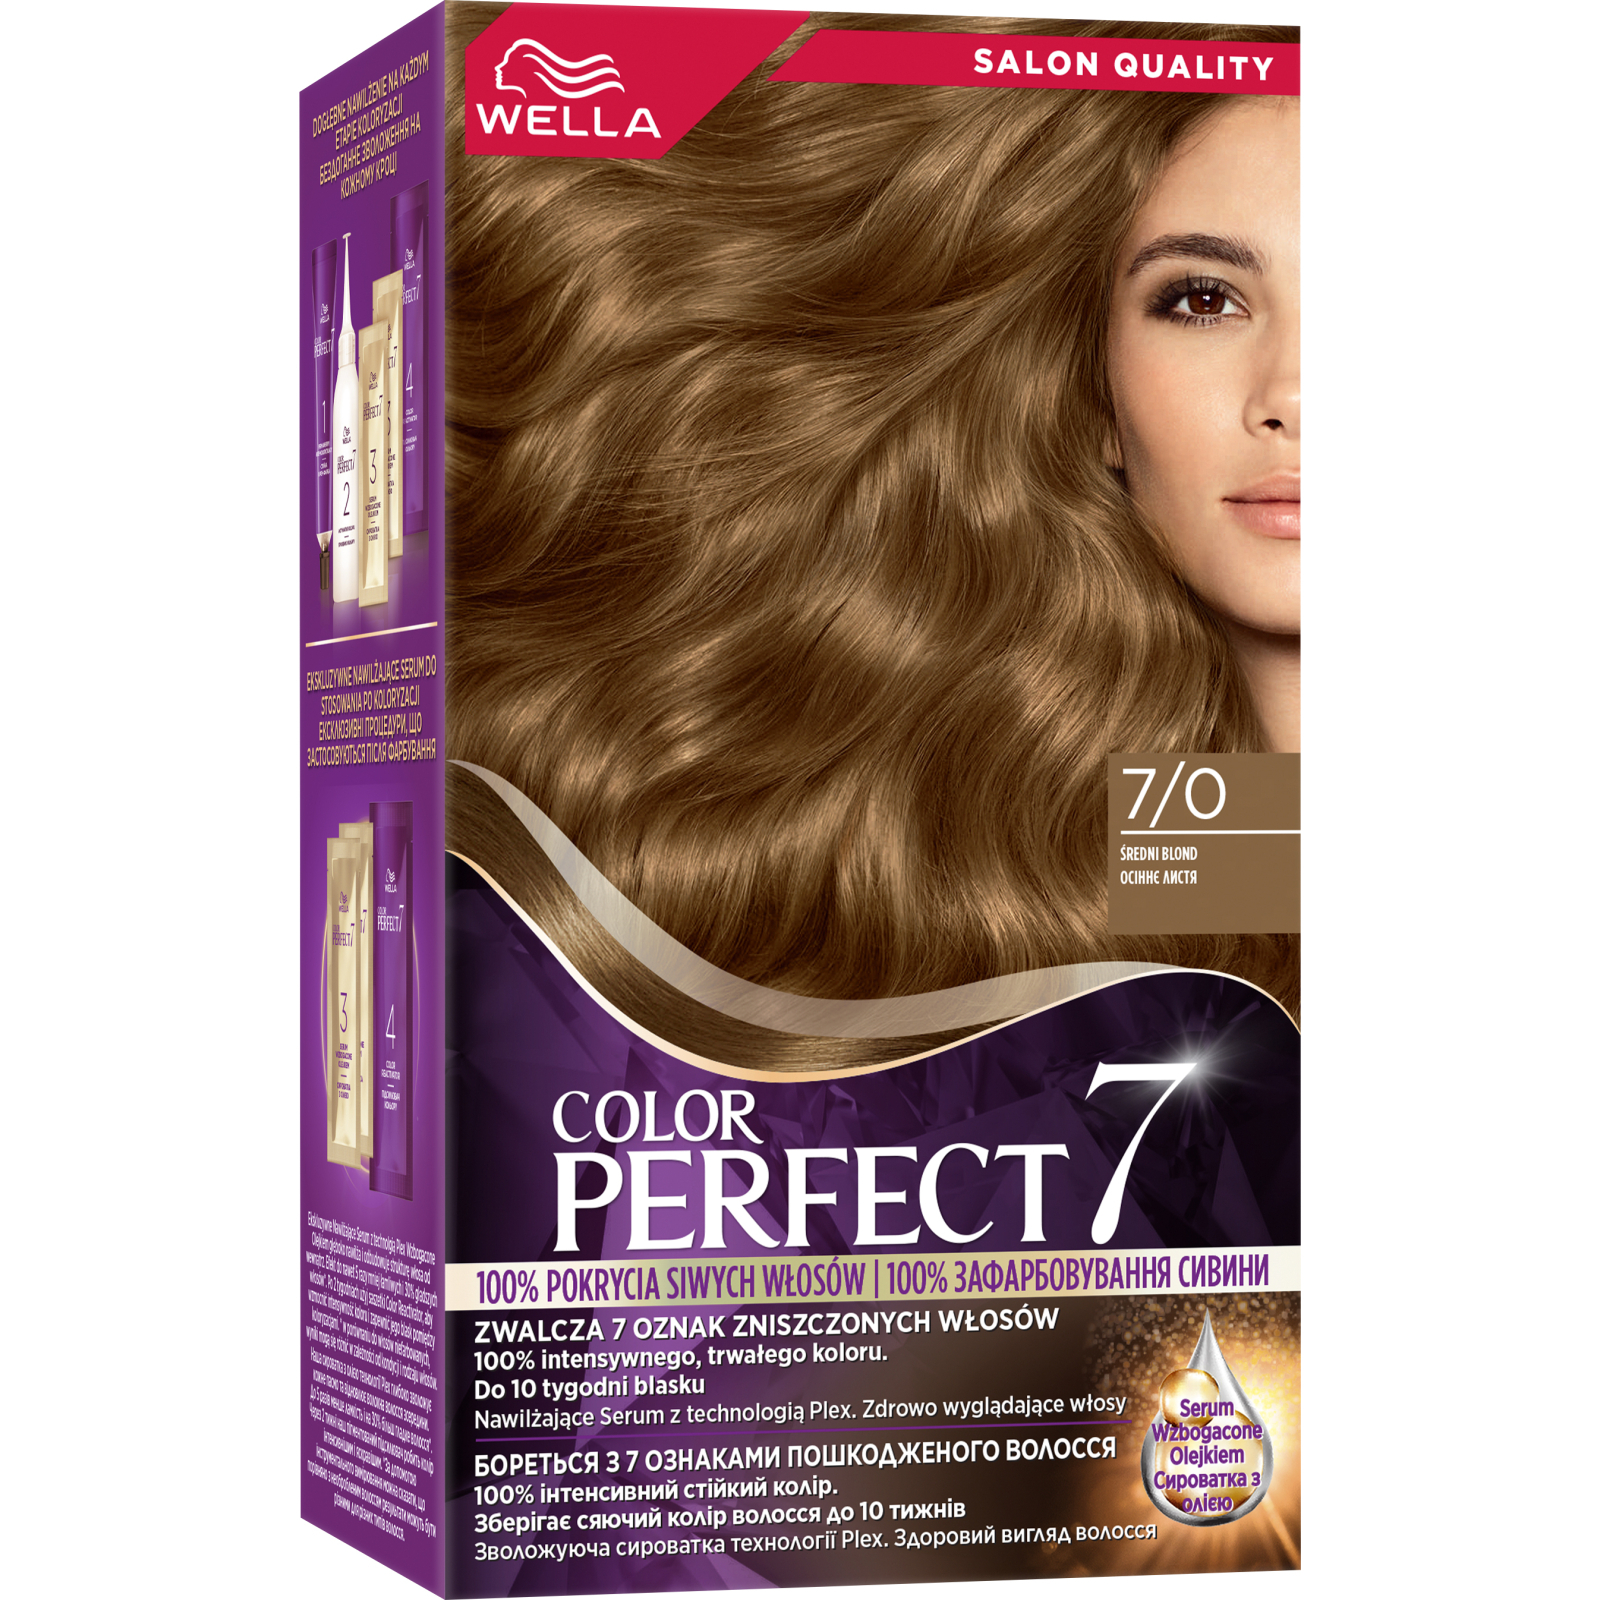 Краска для волос Wella Color Perfect 3/0 Темный шатен (4064666598277)